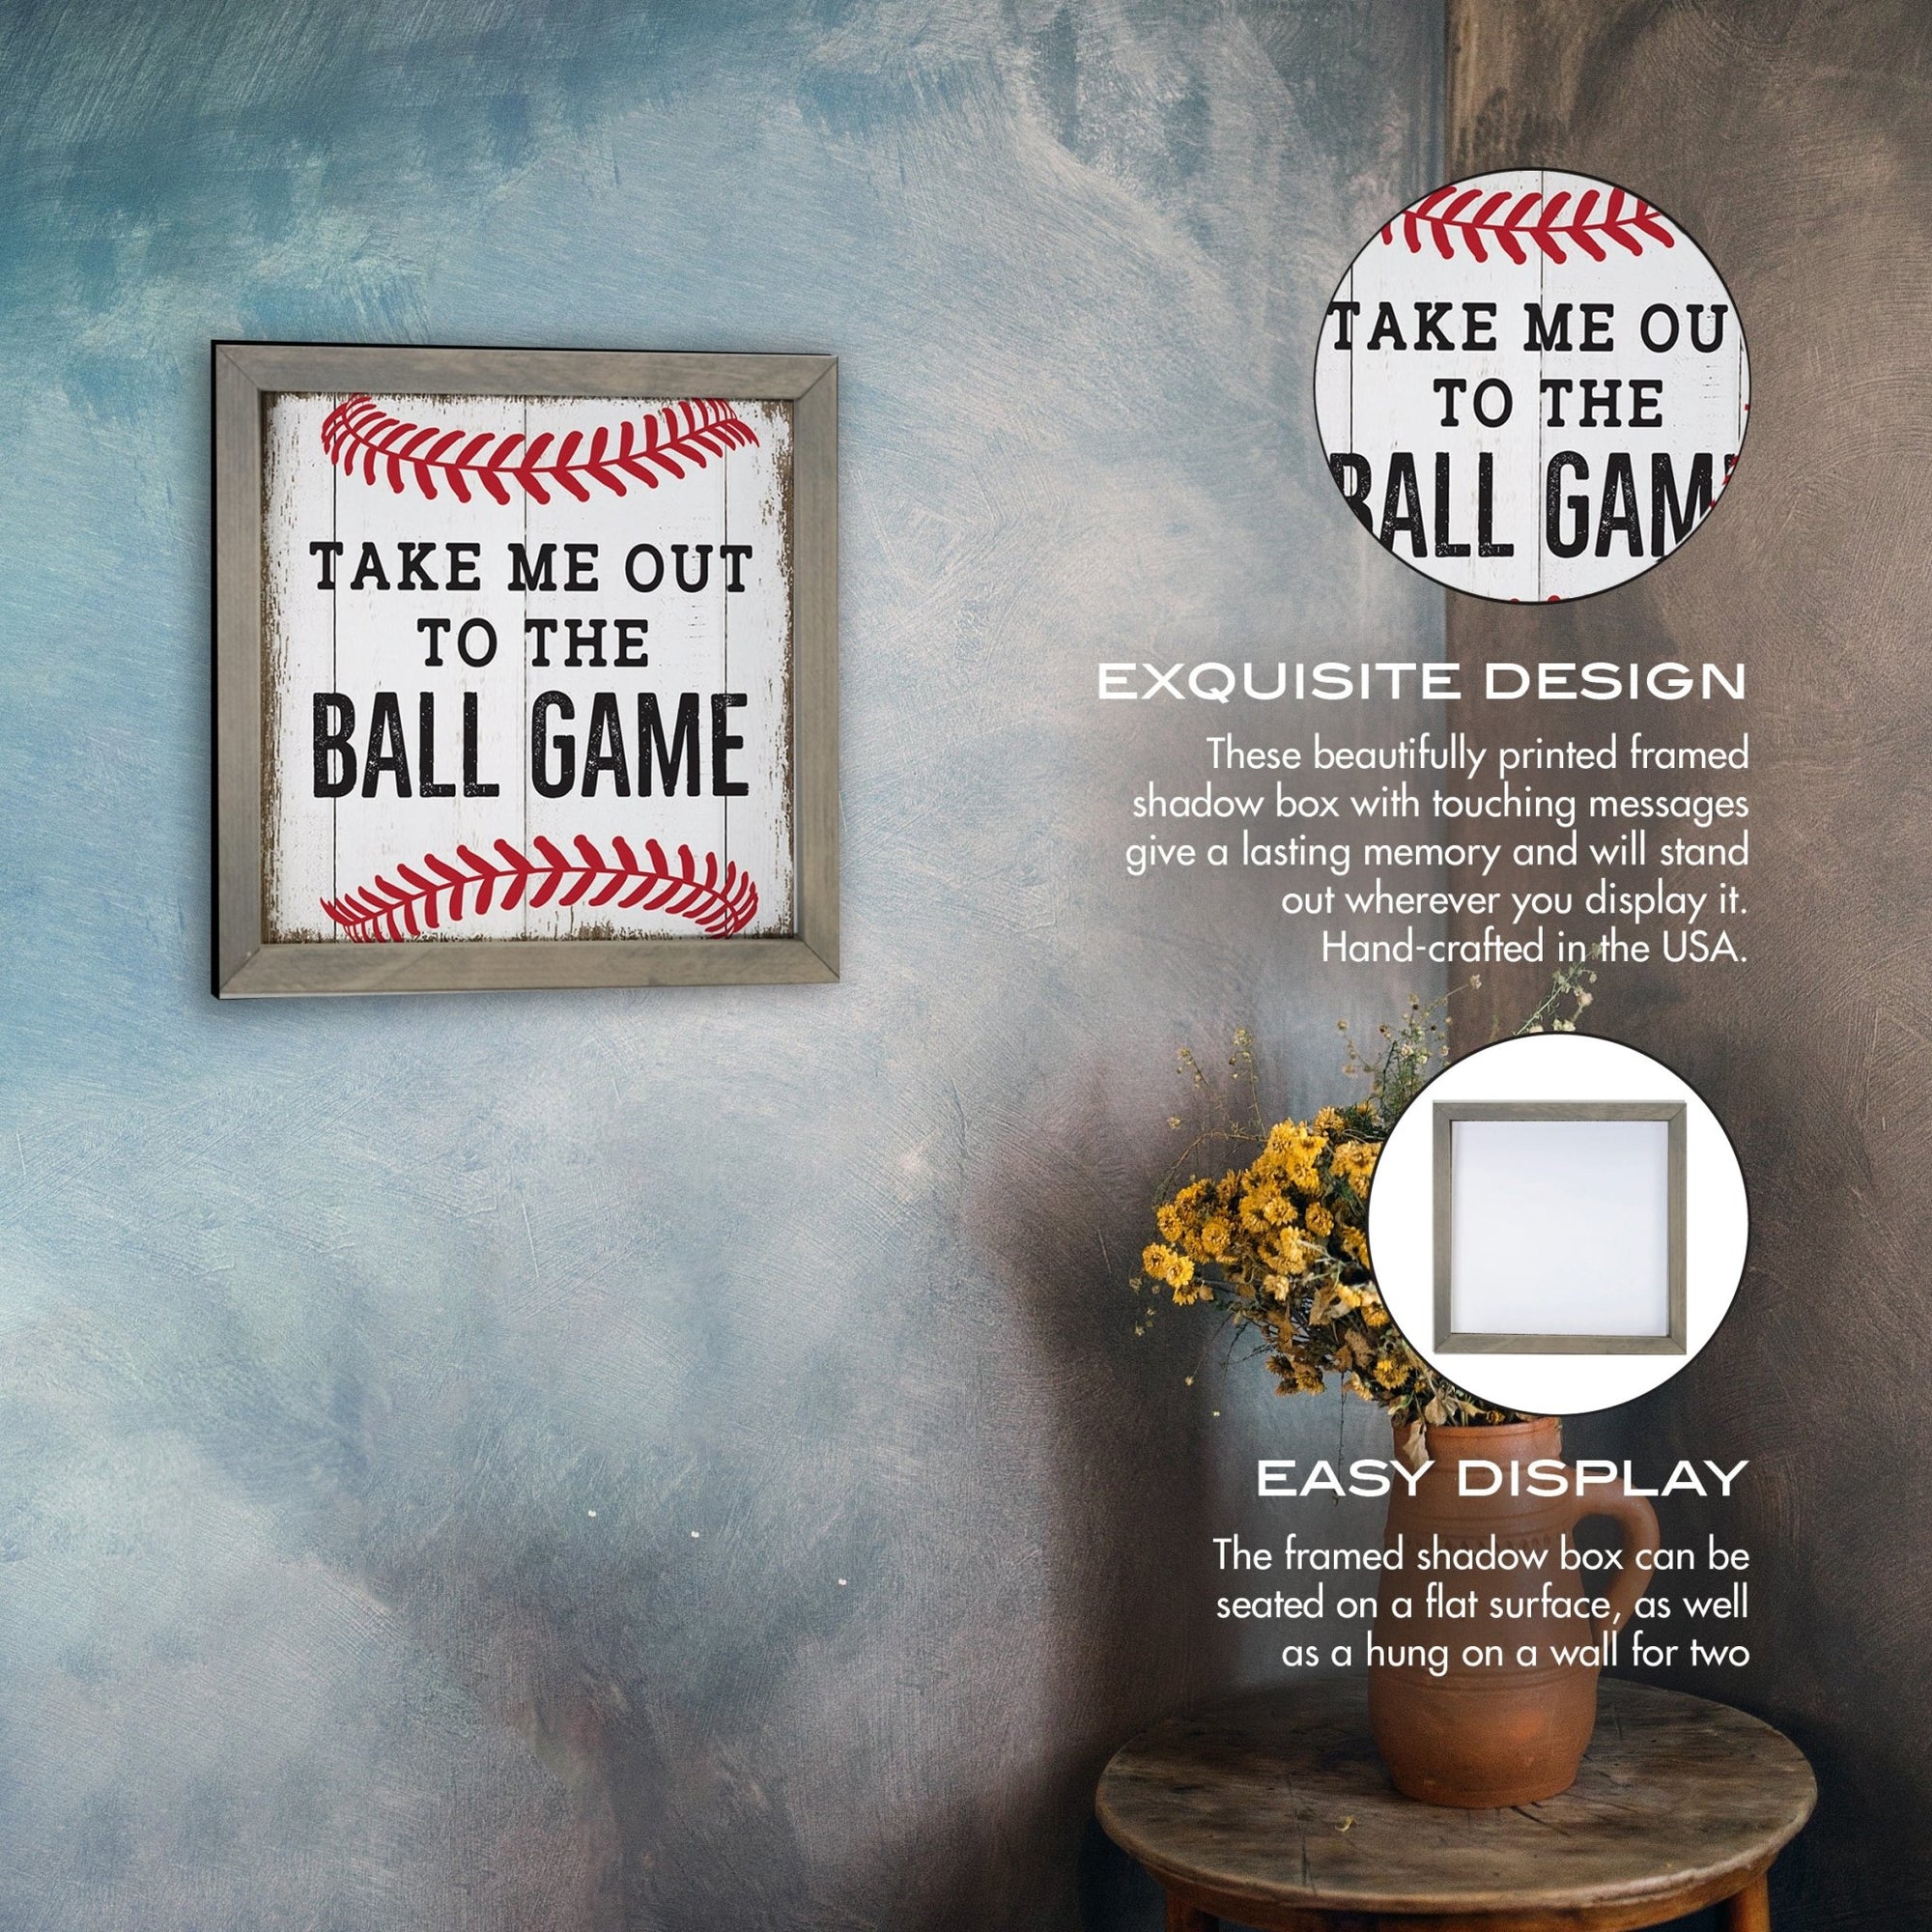 Elegant Baseball Framed Shadow Box Shelf Décor With Inspiring Bible Verses - Ball Game - LifeSong Milestones